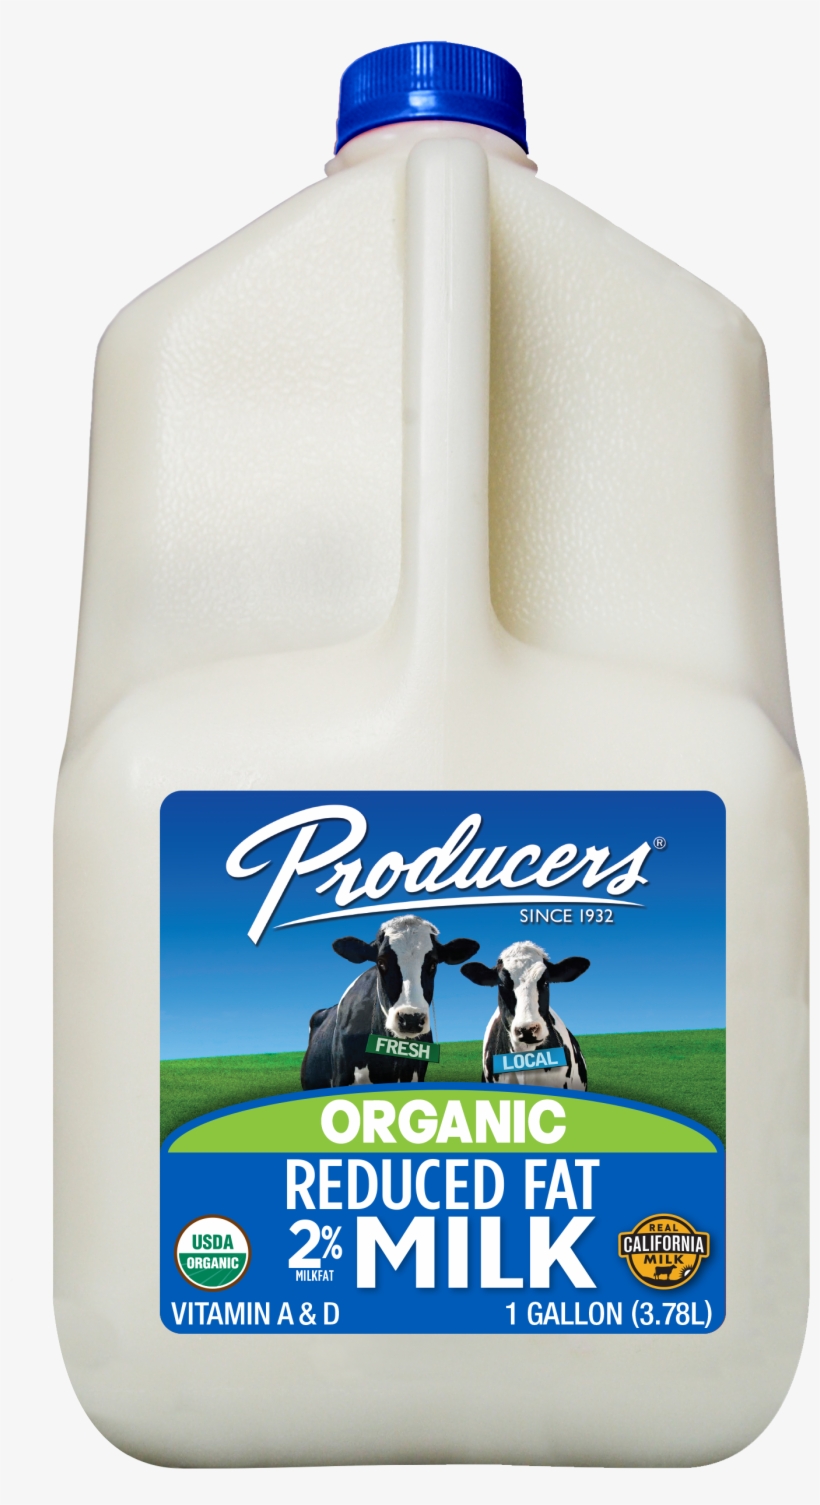 Organic 2% Reduced Fat Milk - Producers 2% Milk, transparent png #9152214